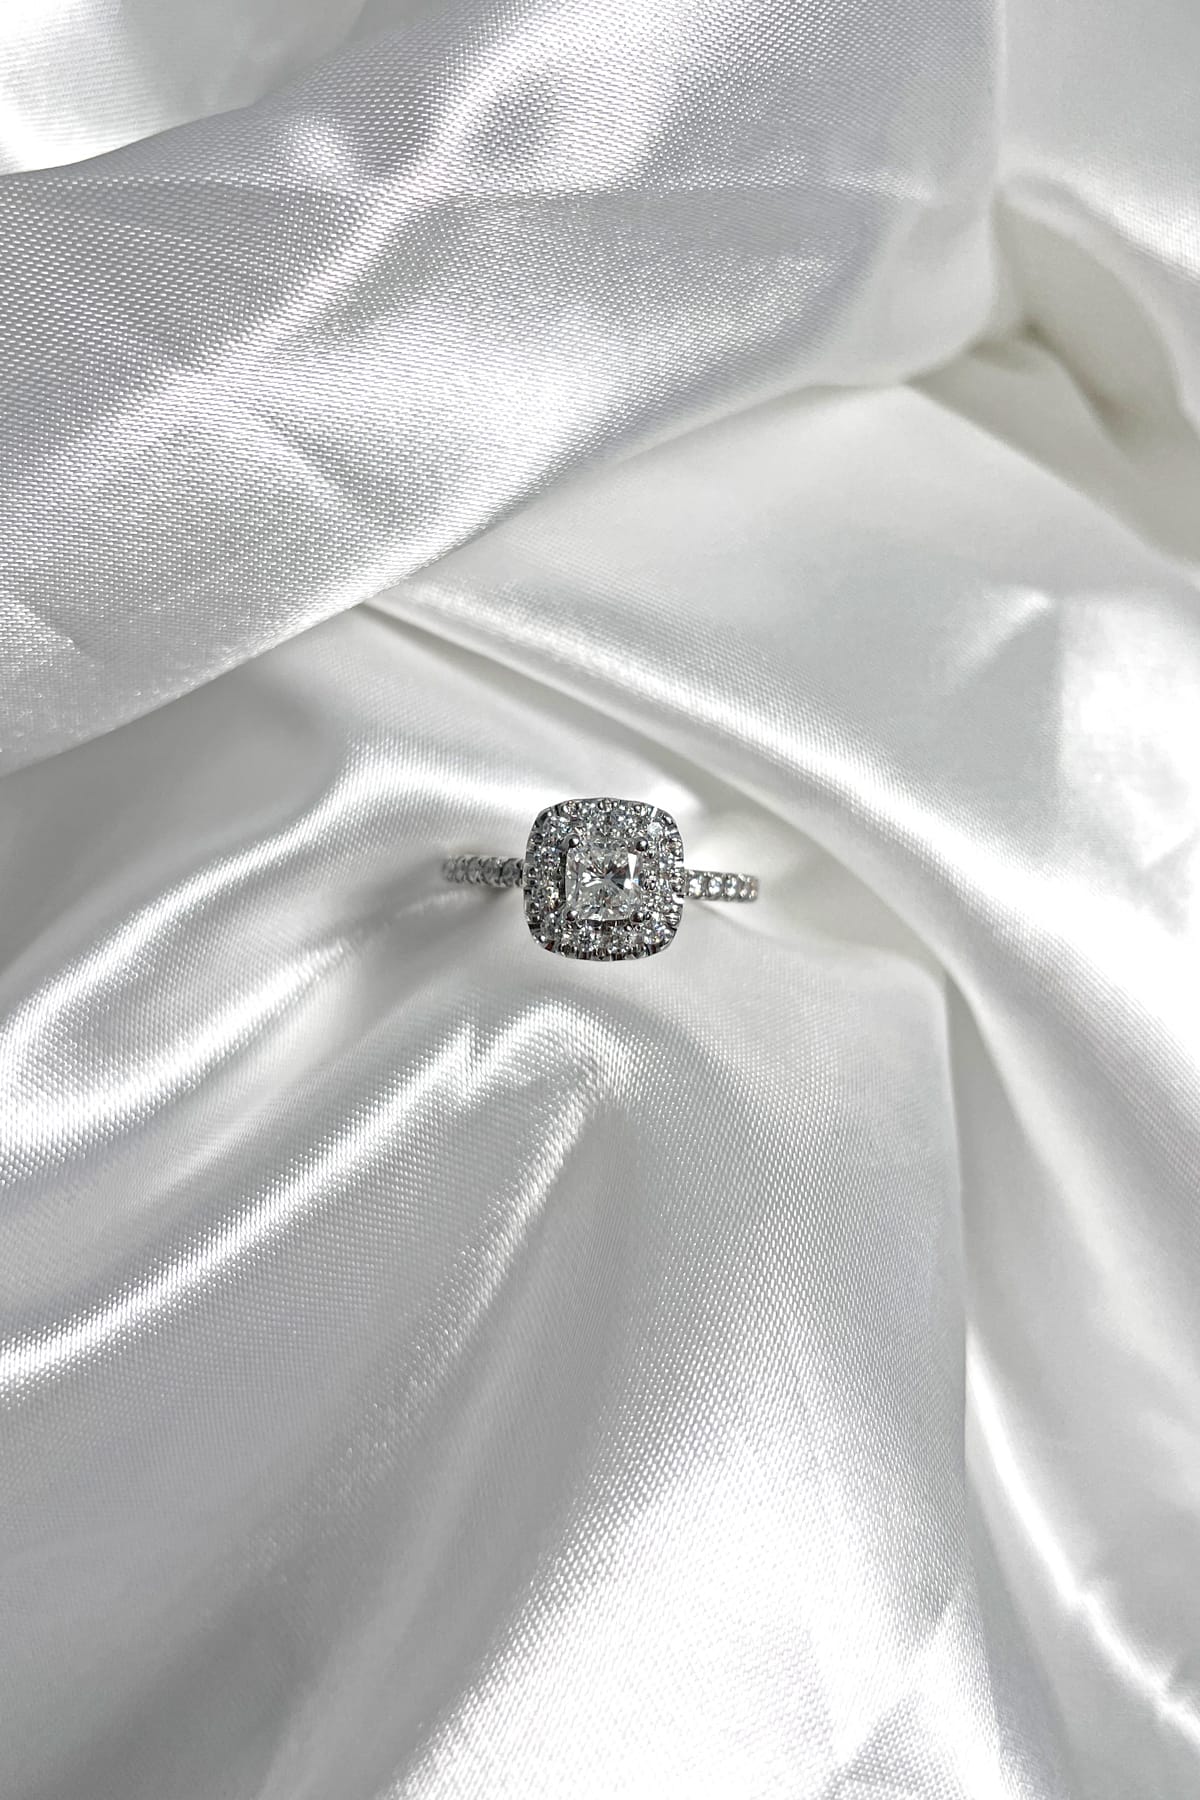 18 carat white gold 0.50ct cushion cut diamond halo ring available at LeGassick Diamonds and Jewellery Gold Coast, Australia